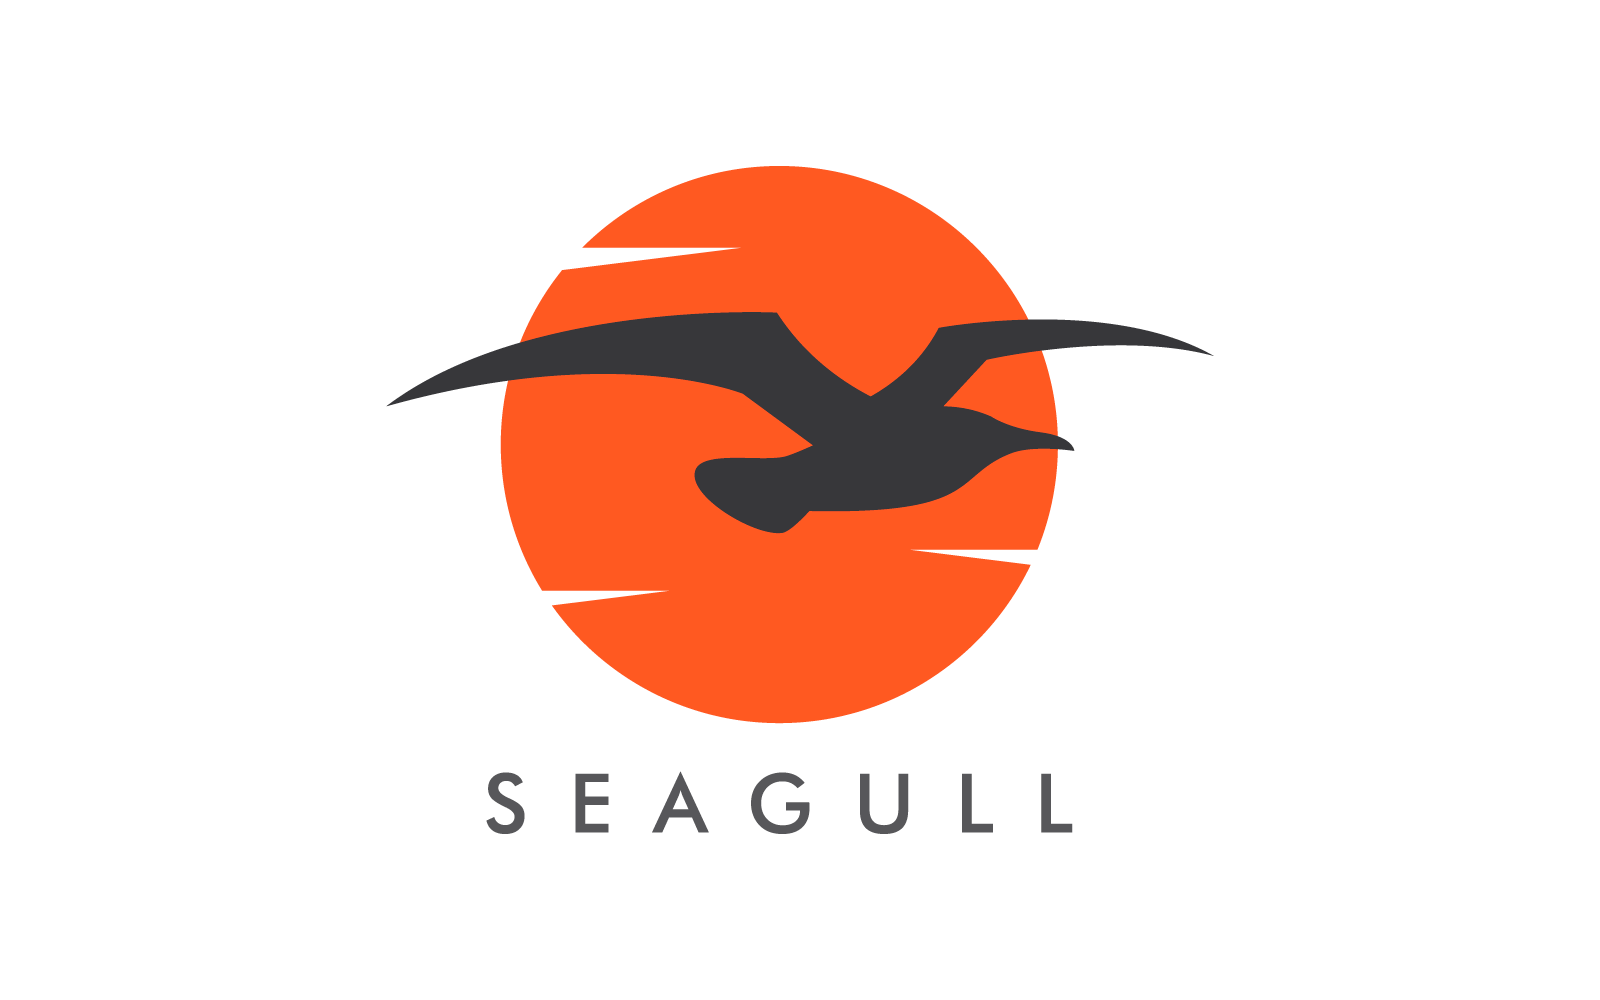 Seagull bird silhouette illustration vector design